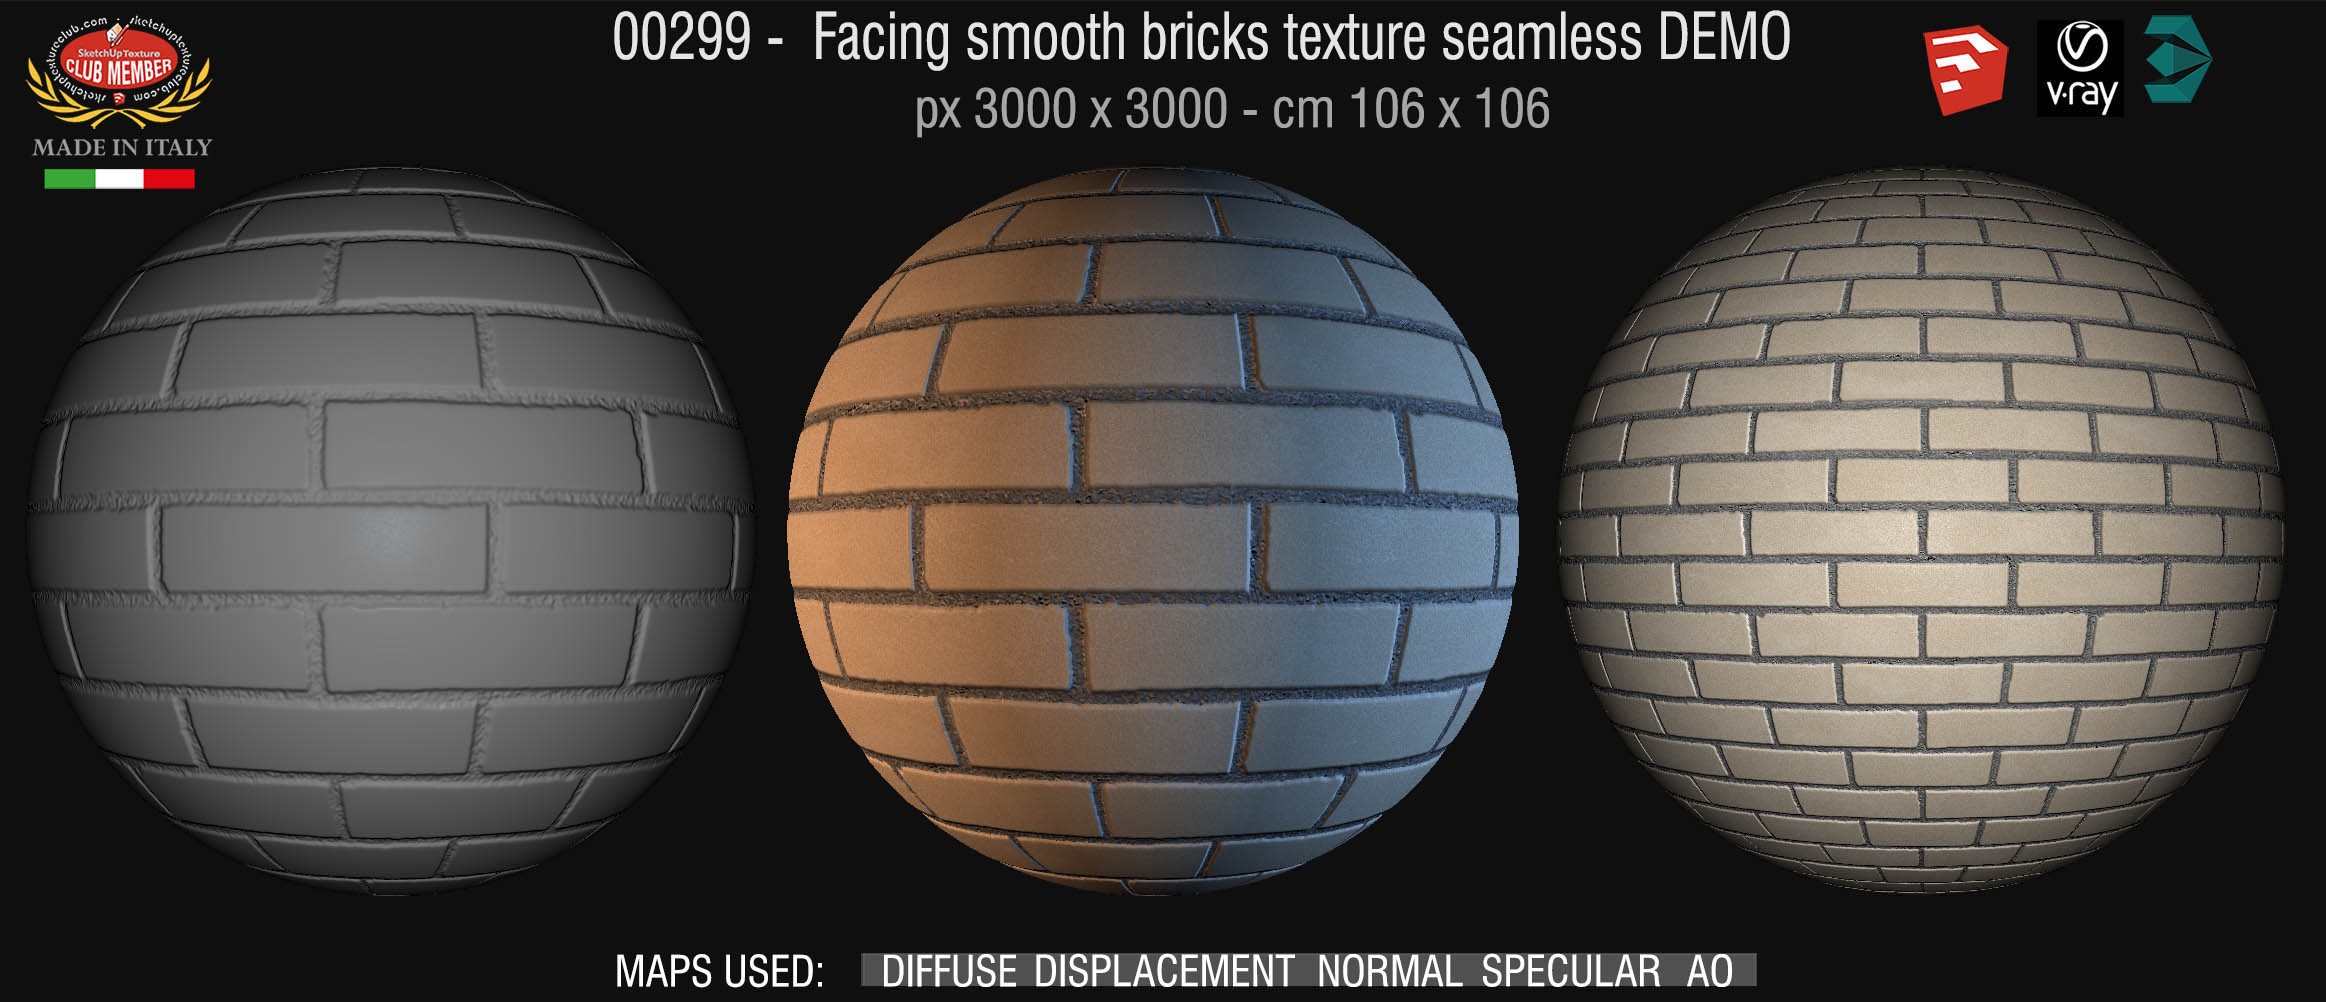 00299 Facing smooth bricks texture seamless + maps DEMO